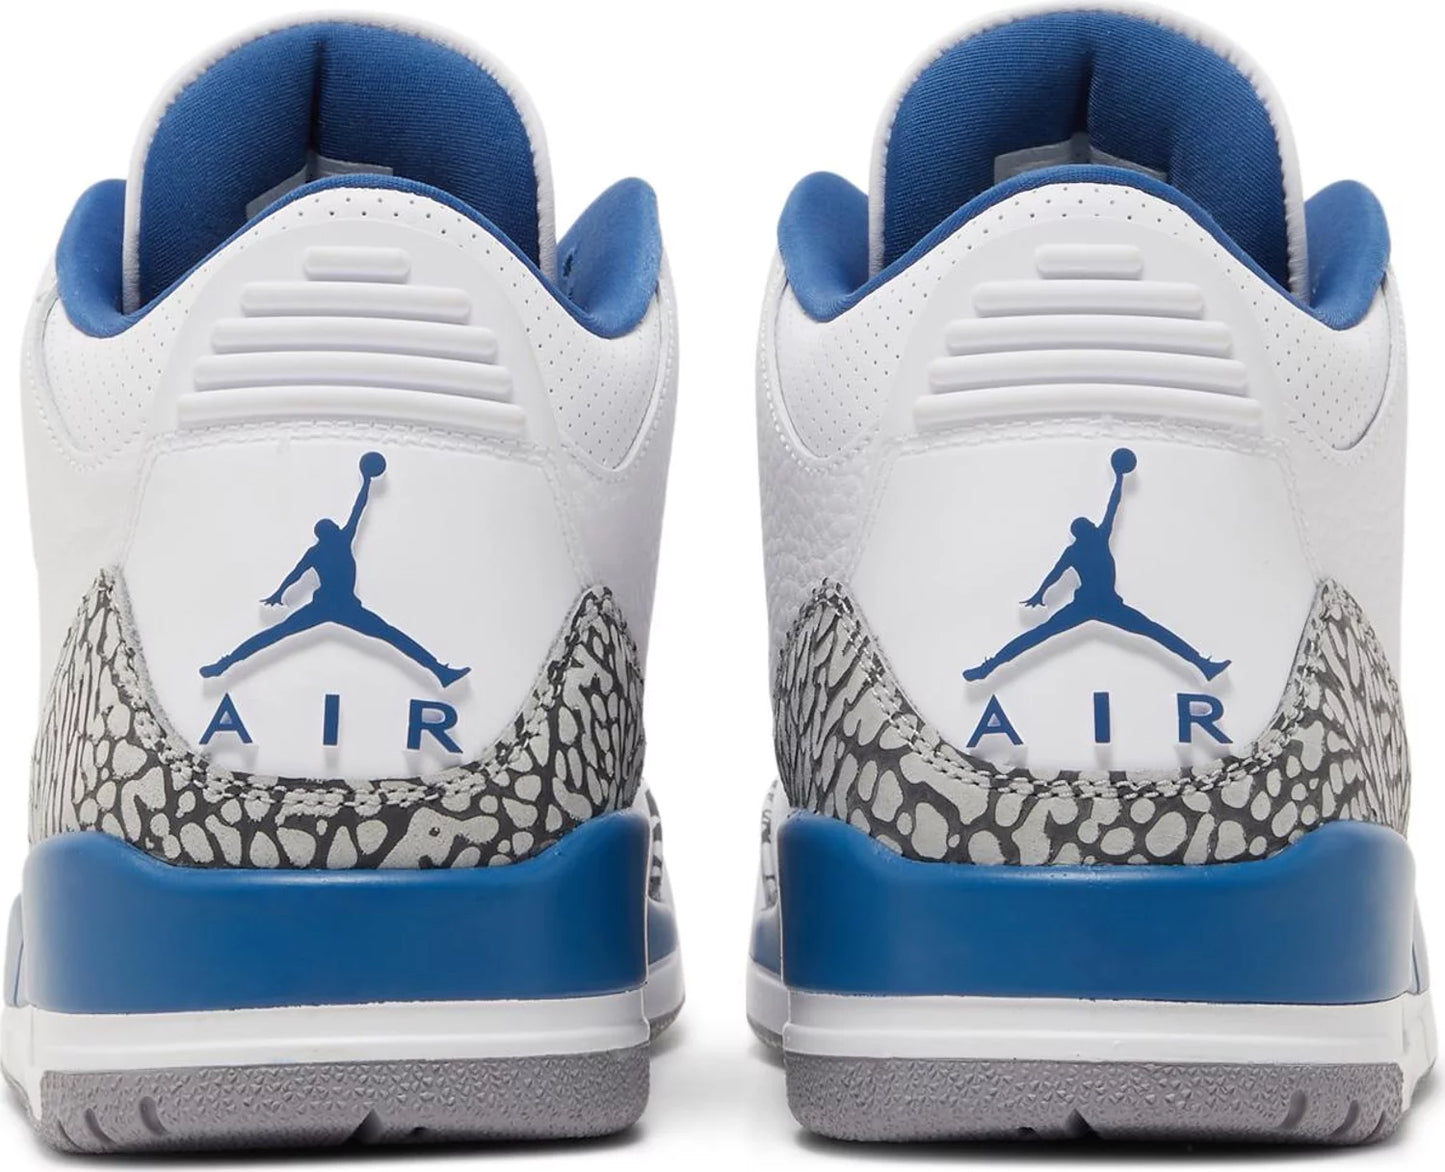 NIKE x AIR JORDAN - Nike Air Jordan 3 Retro Washington Wizards Sneakers